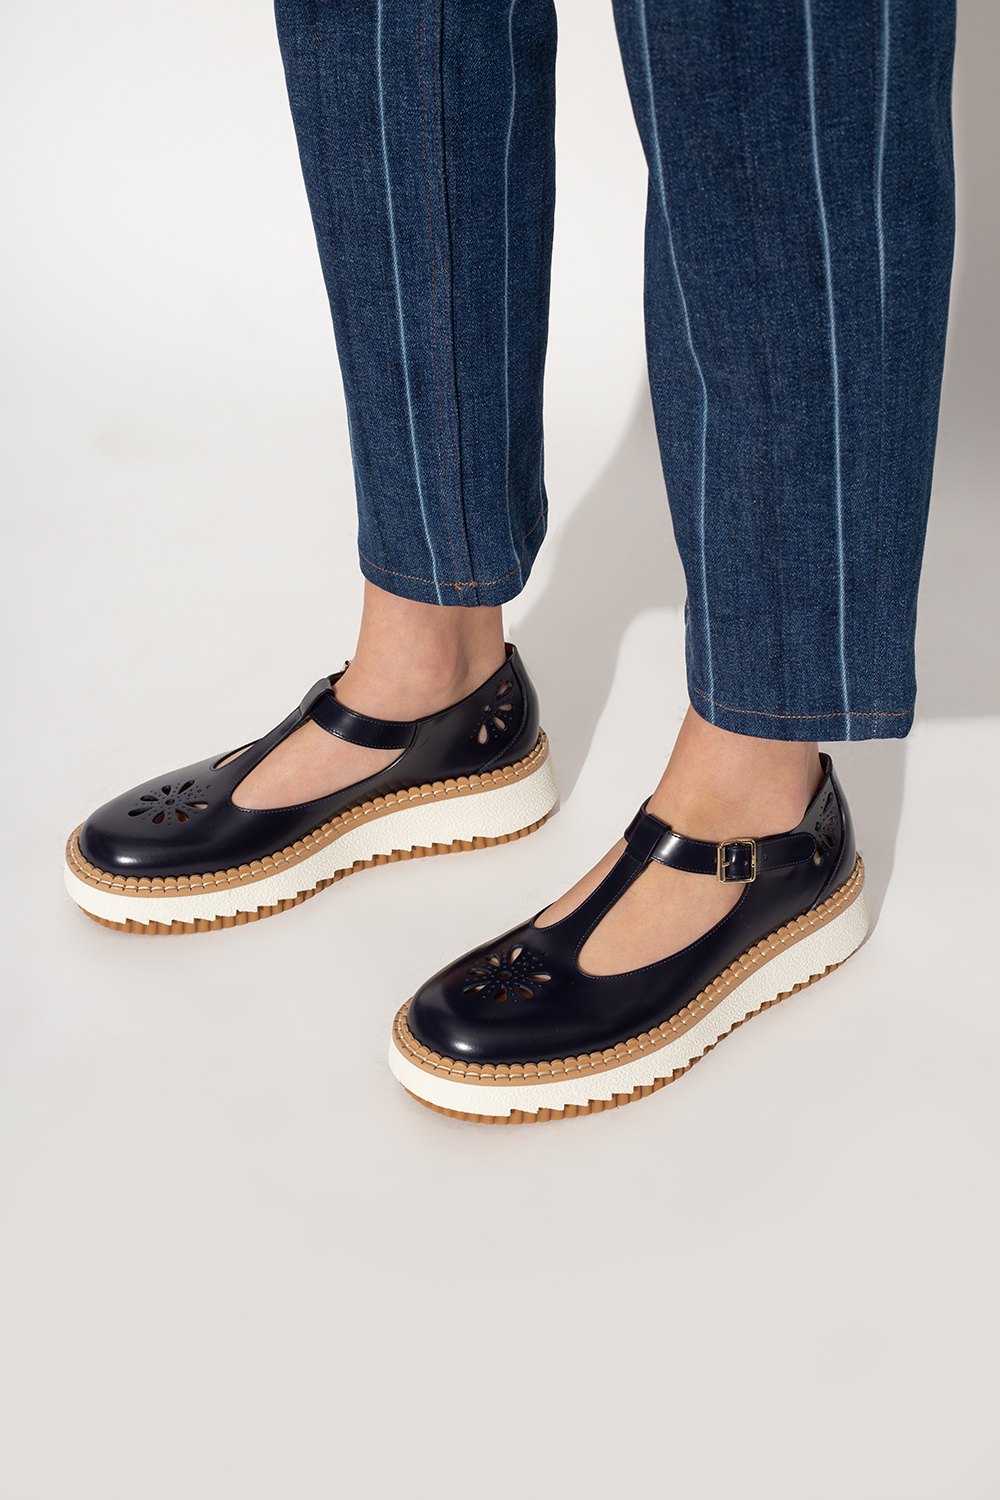 Chloé ‘Mary Jane’ leather shoes | Women's Shoes | Vitkac